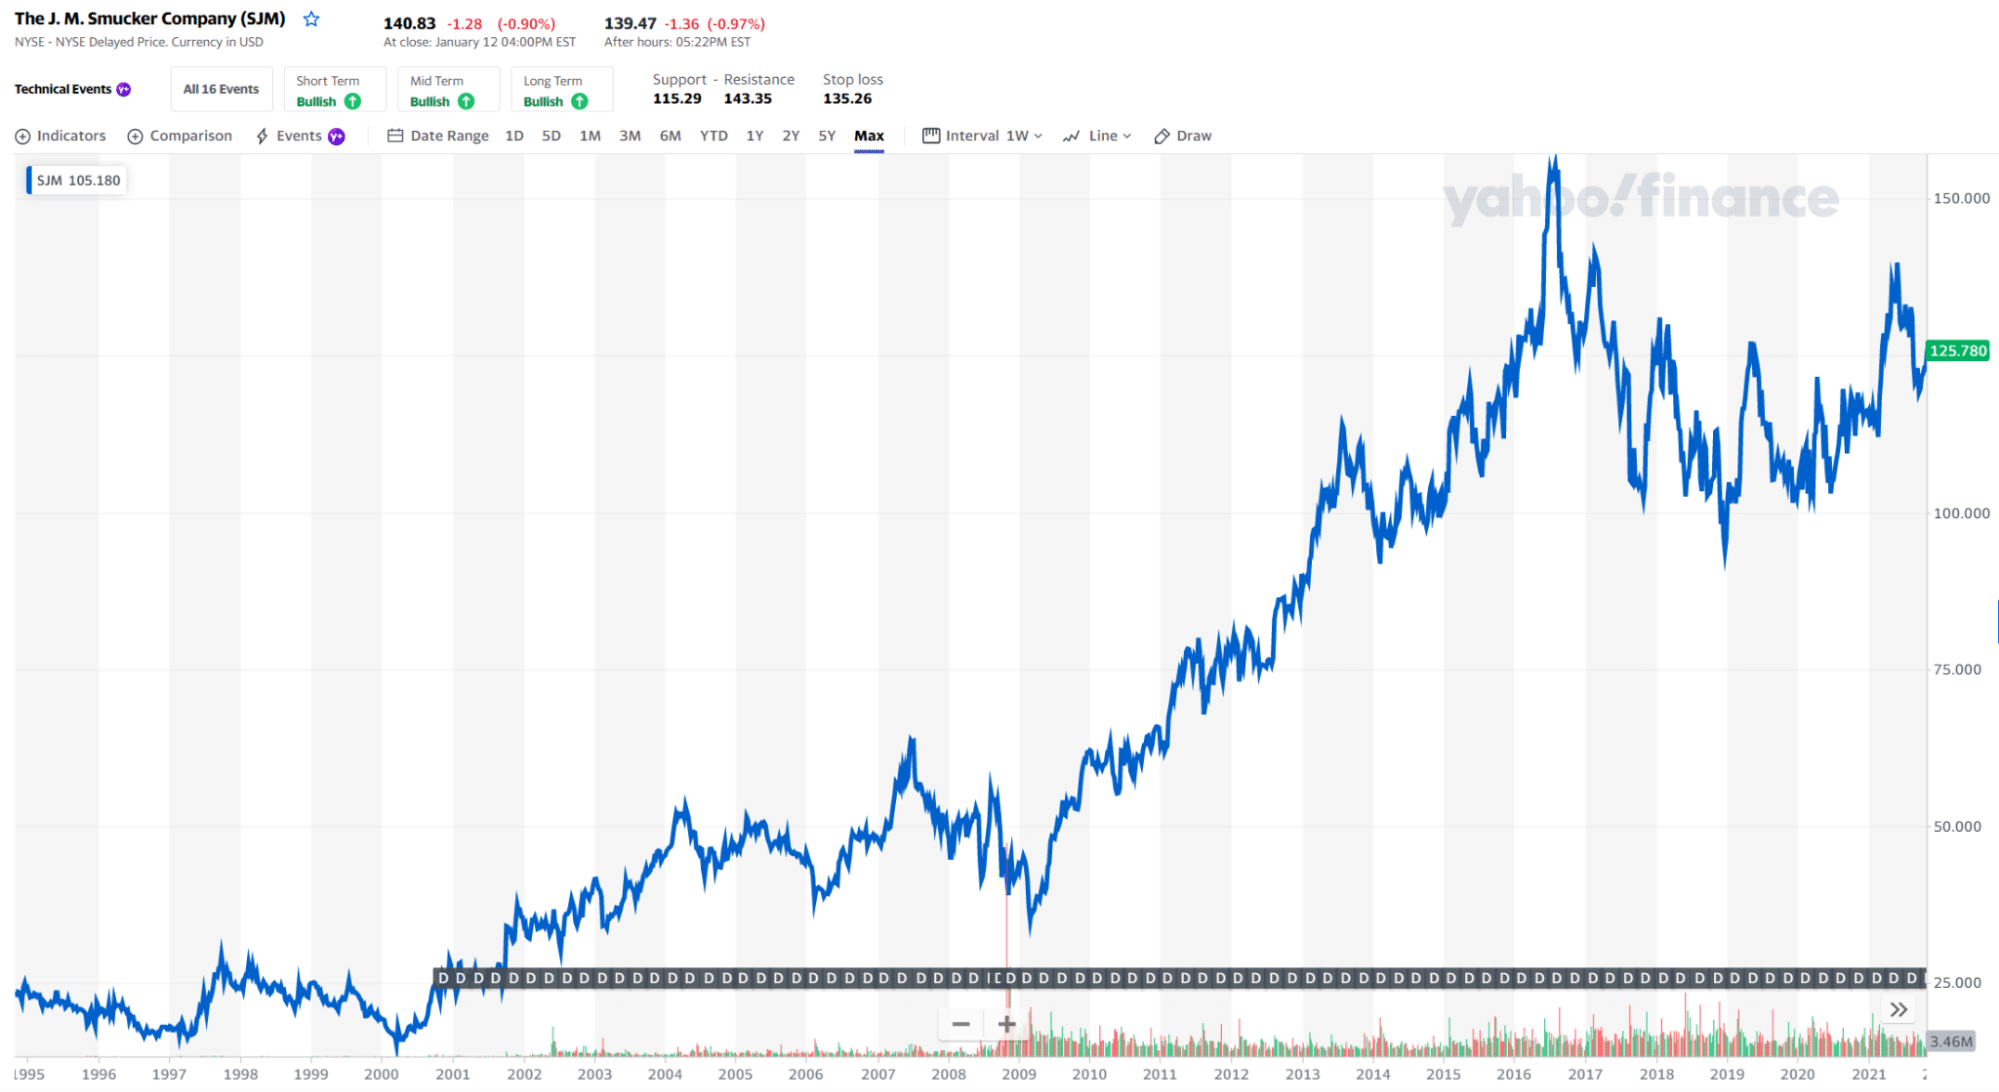 SJM stock price chart 1995-2022